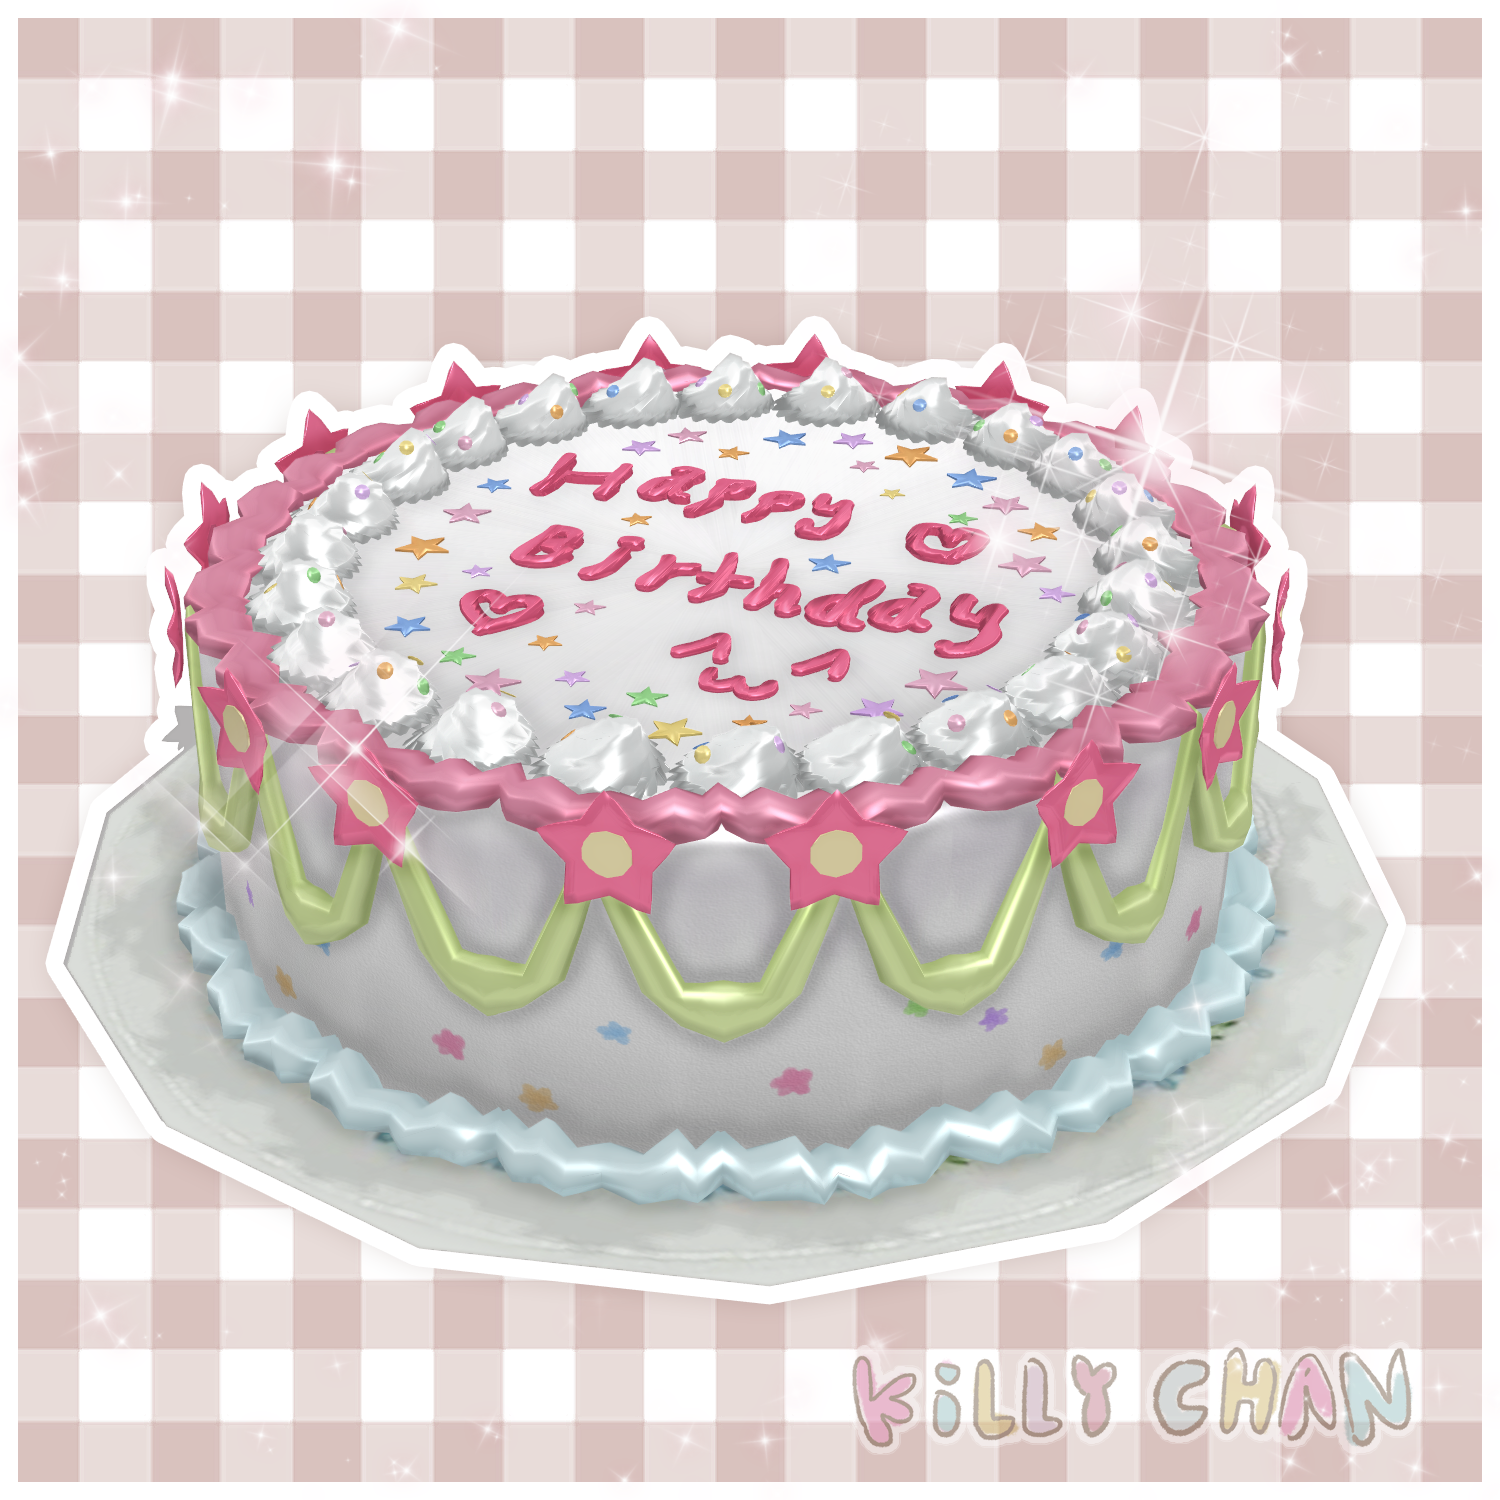 [MMD] Cute Cake + DL! by kilaroka on DeviantArt